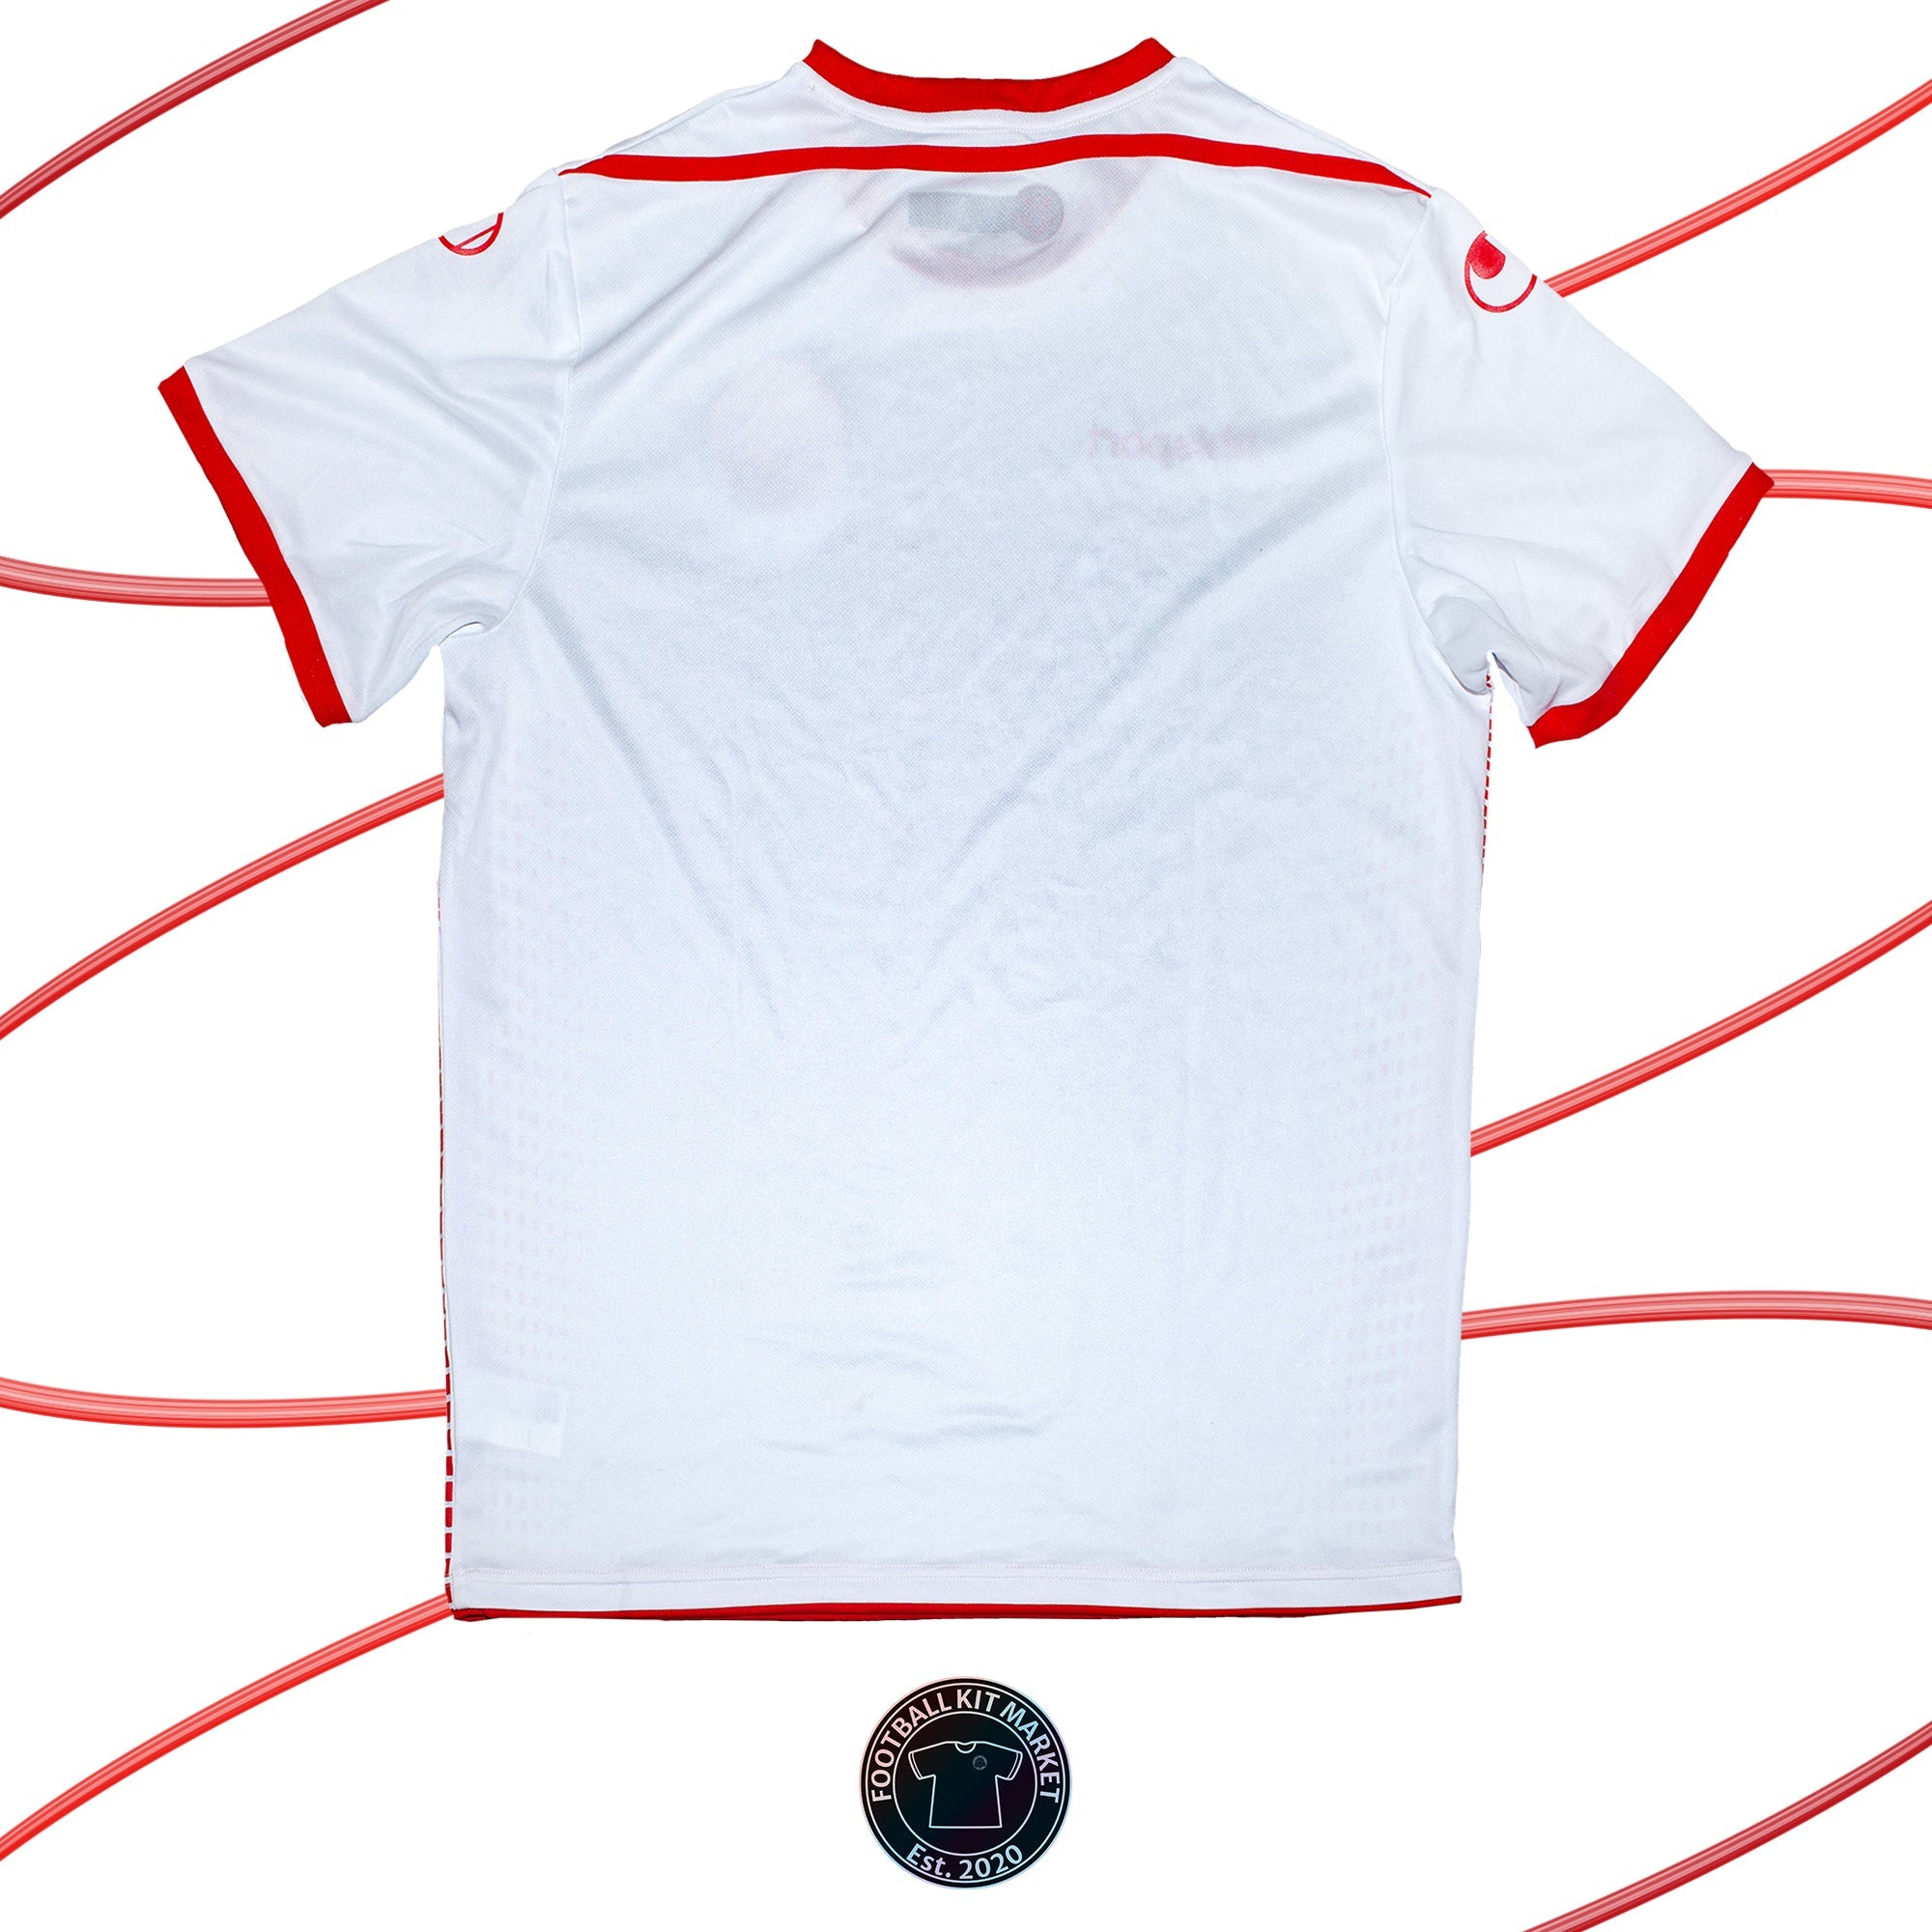 Genuine TUNISIA Home (2018-2020) - UHLSPORT (XL) - Product Image from Football Kit Market